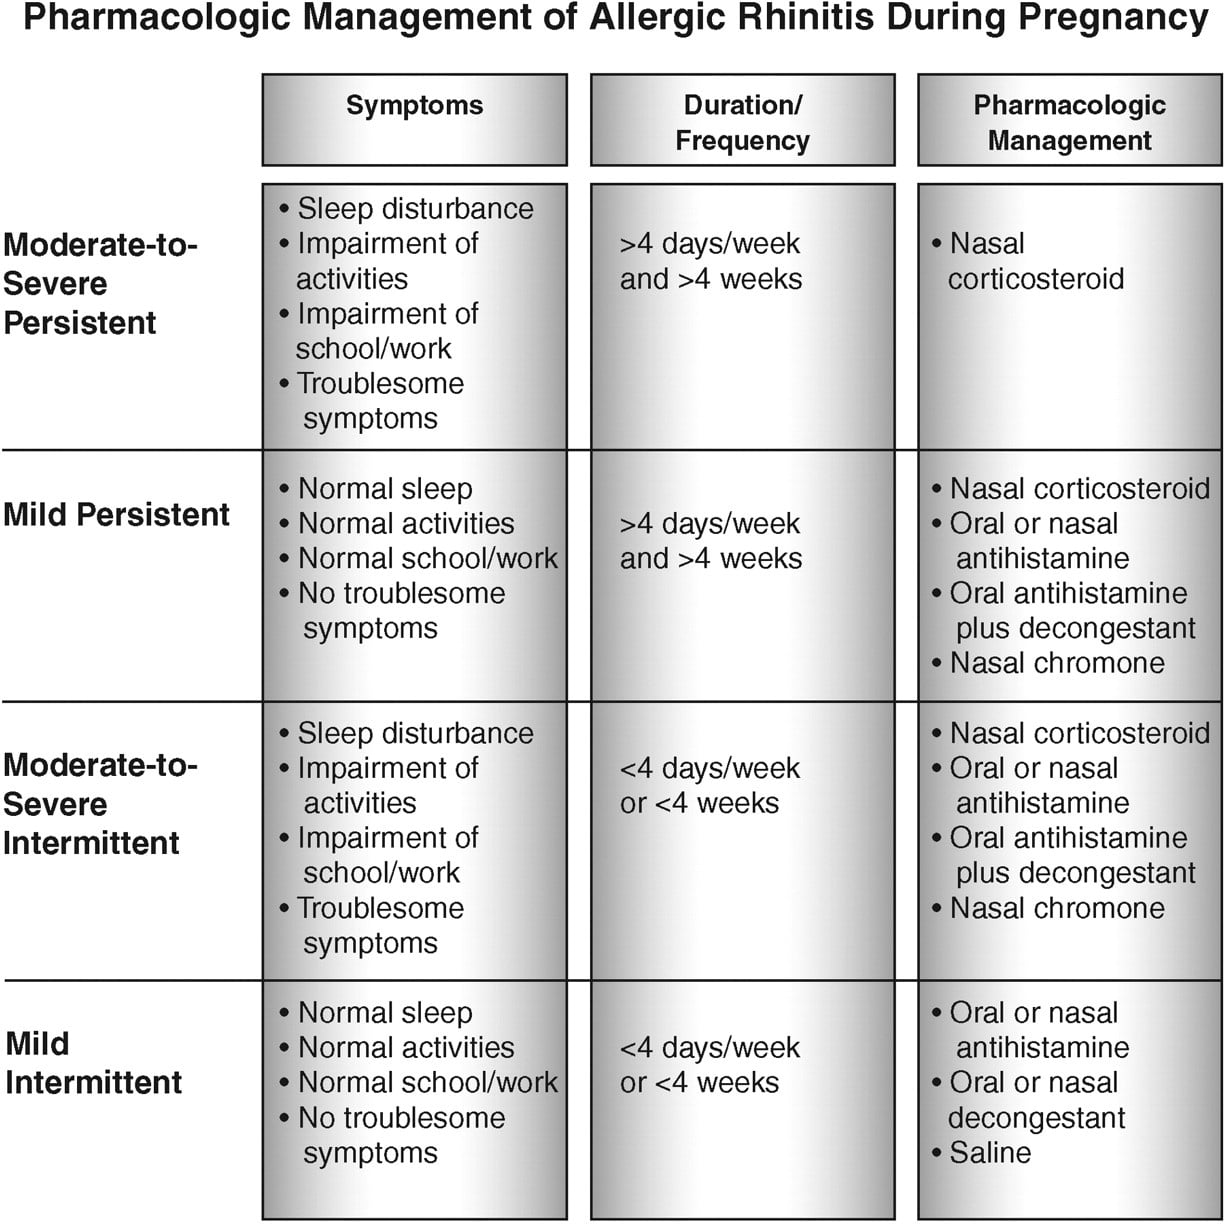 Treating Asthma and Comorbid Allergic Rhinitis in Pregnancy